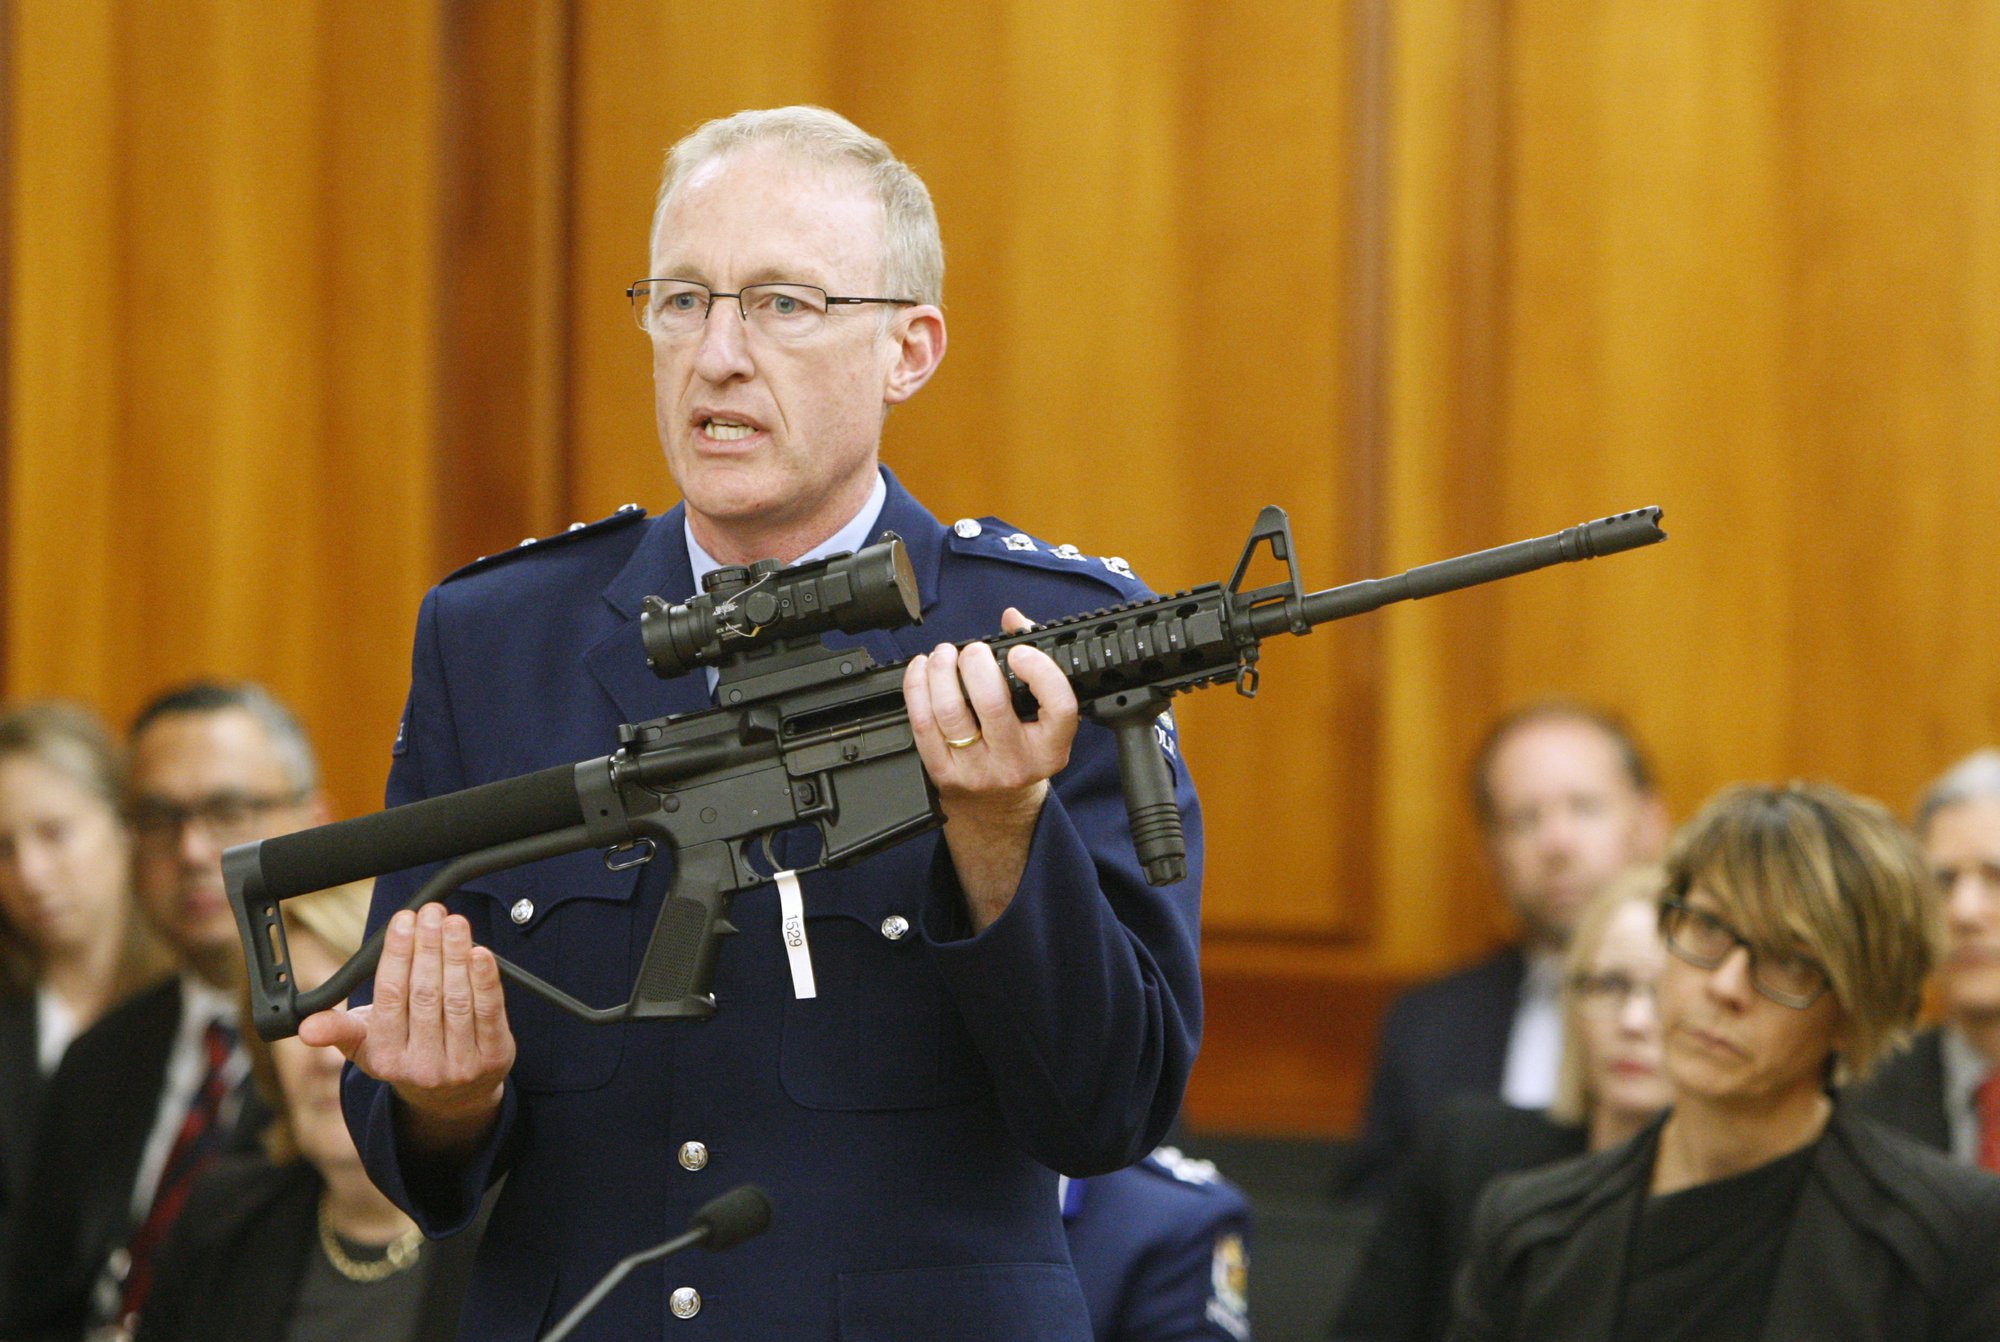 New Zealand’s new gun laws get final assent to take effect